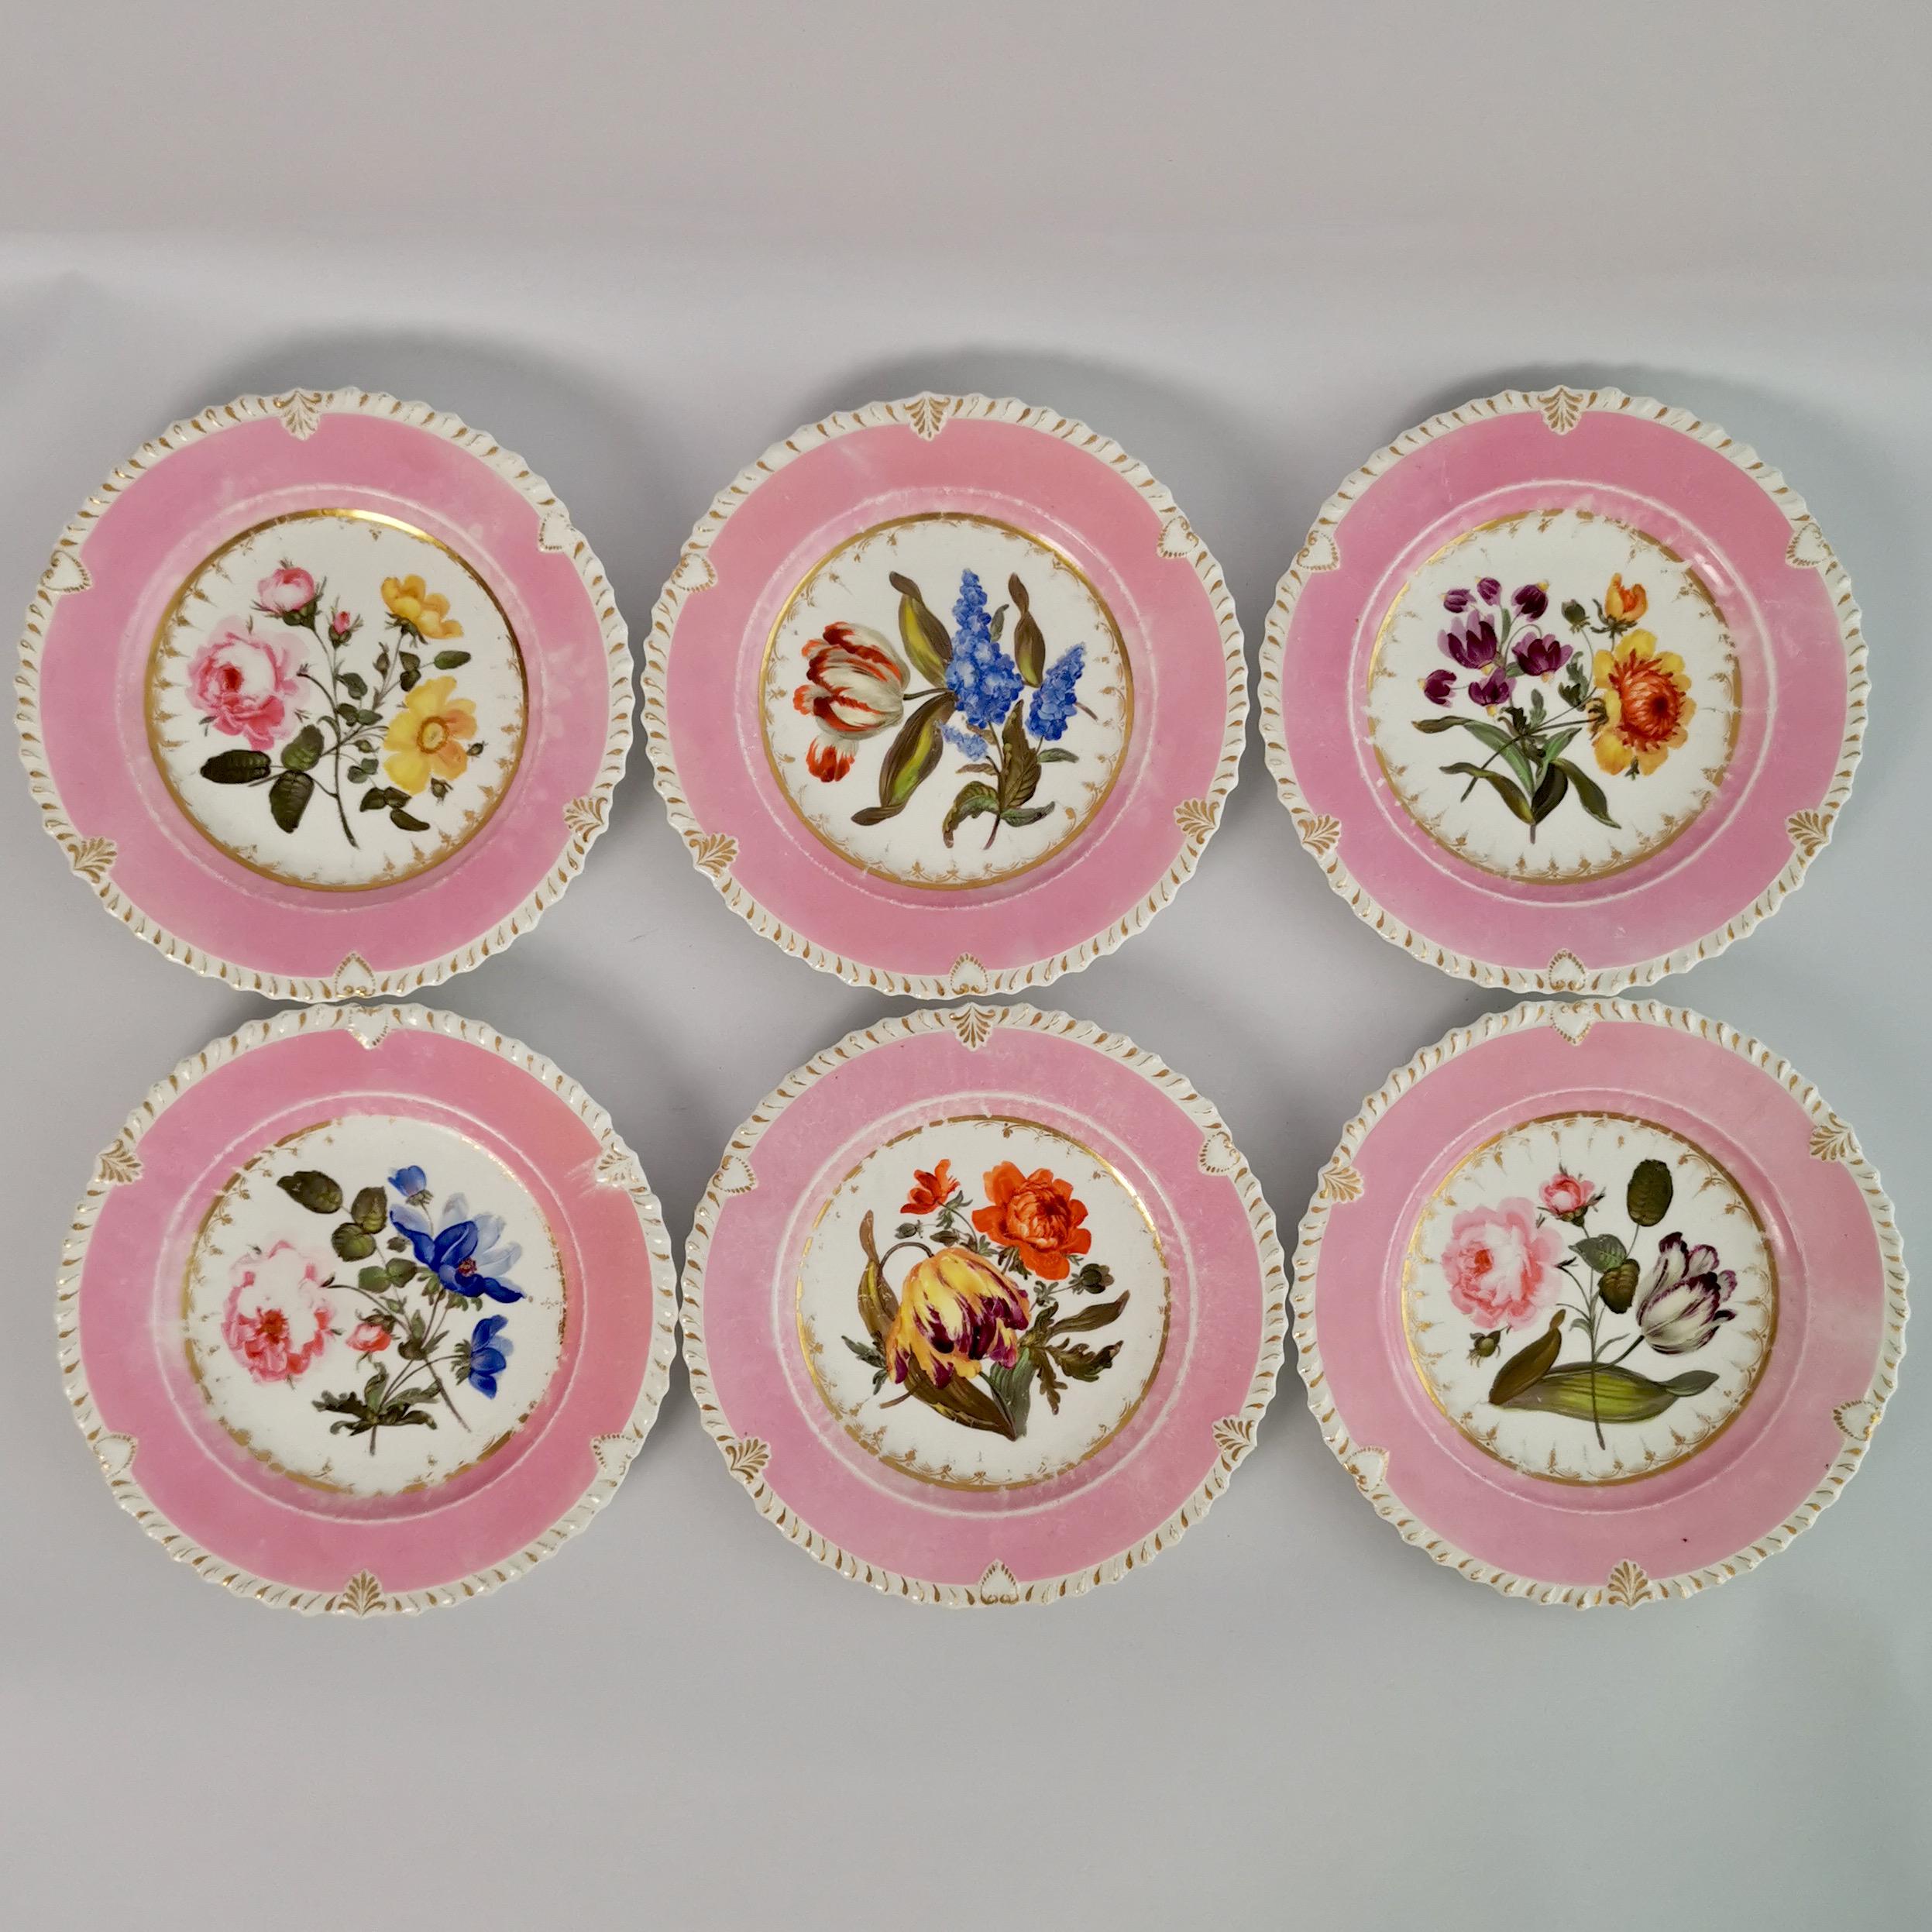 Coalport Porcelain Dessert Service, Pink with Flowers, Regency 1820-1825 10